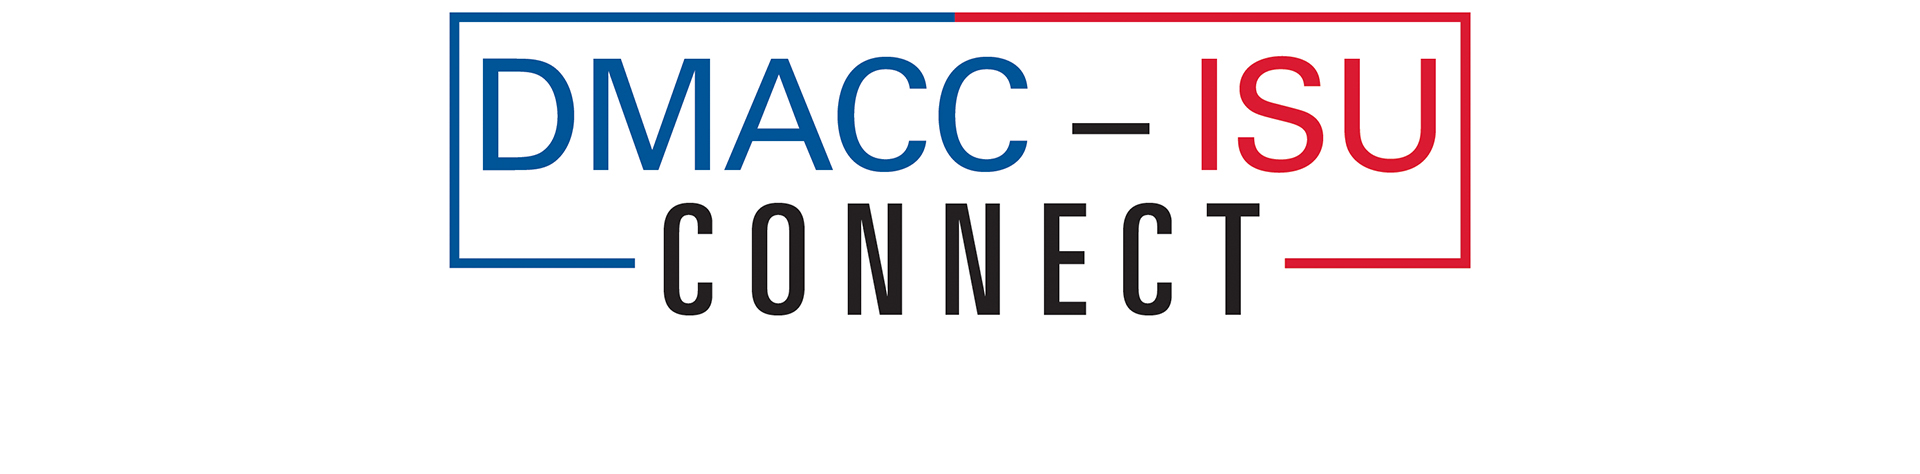 DMACC - ISU Connect logo